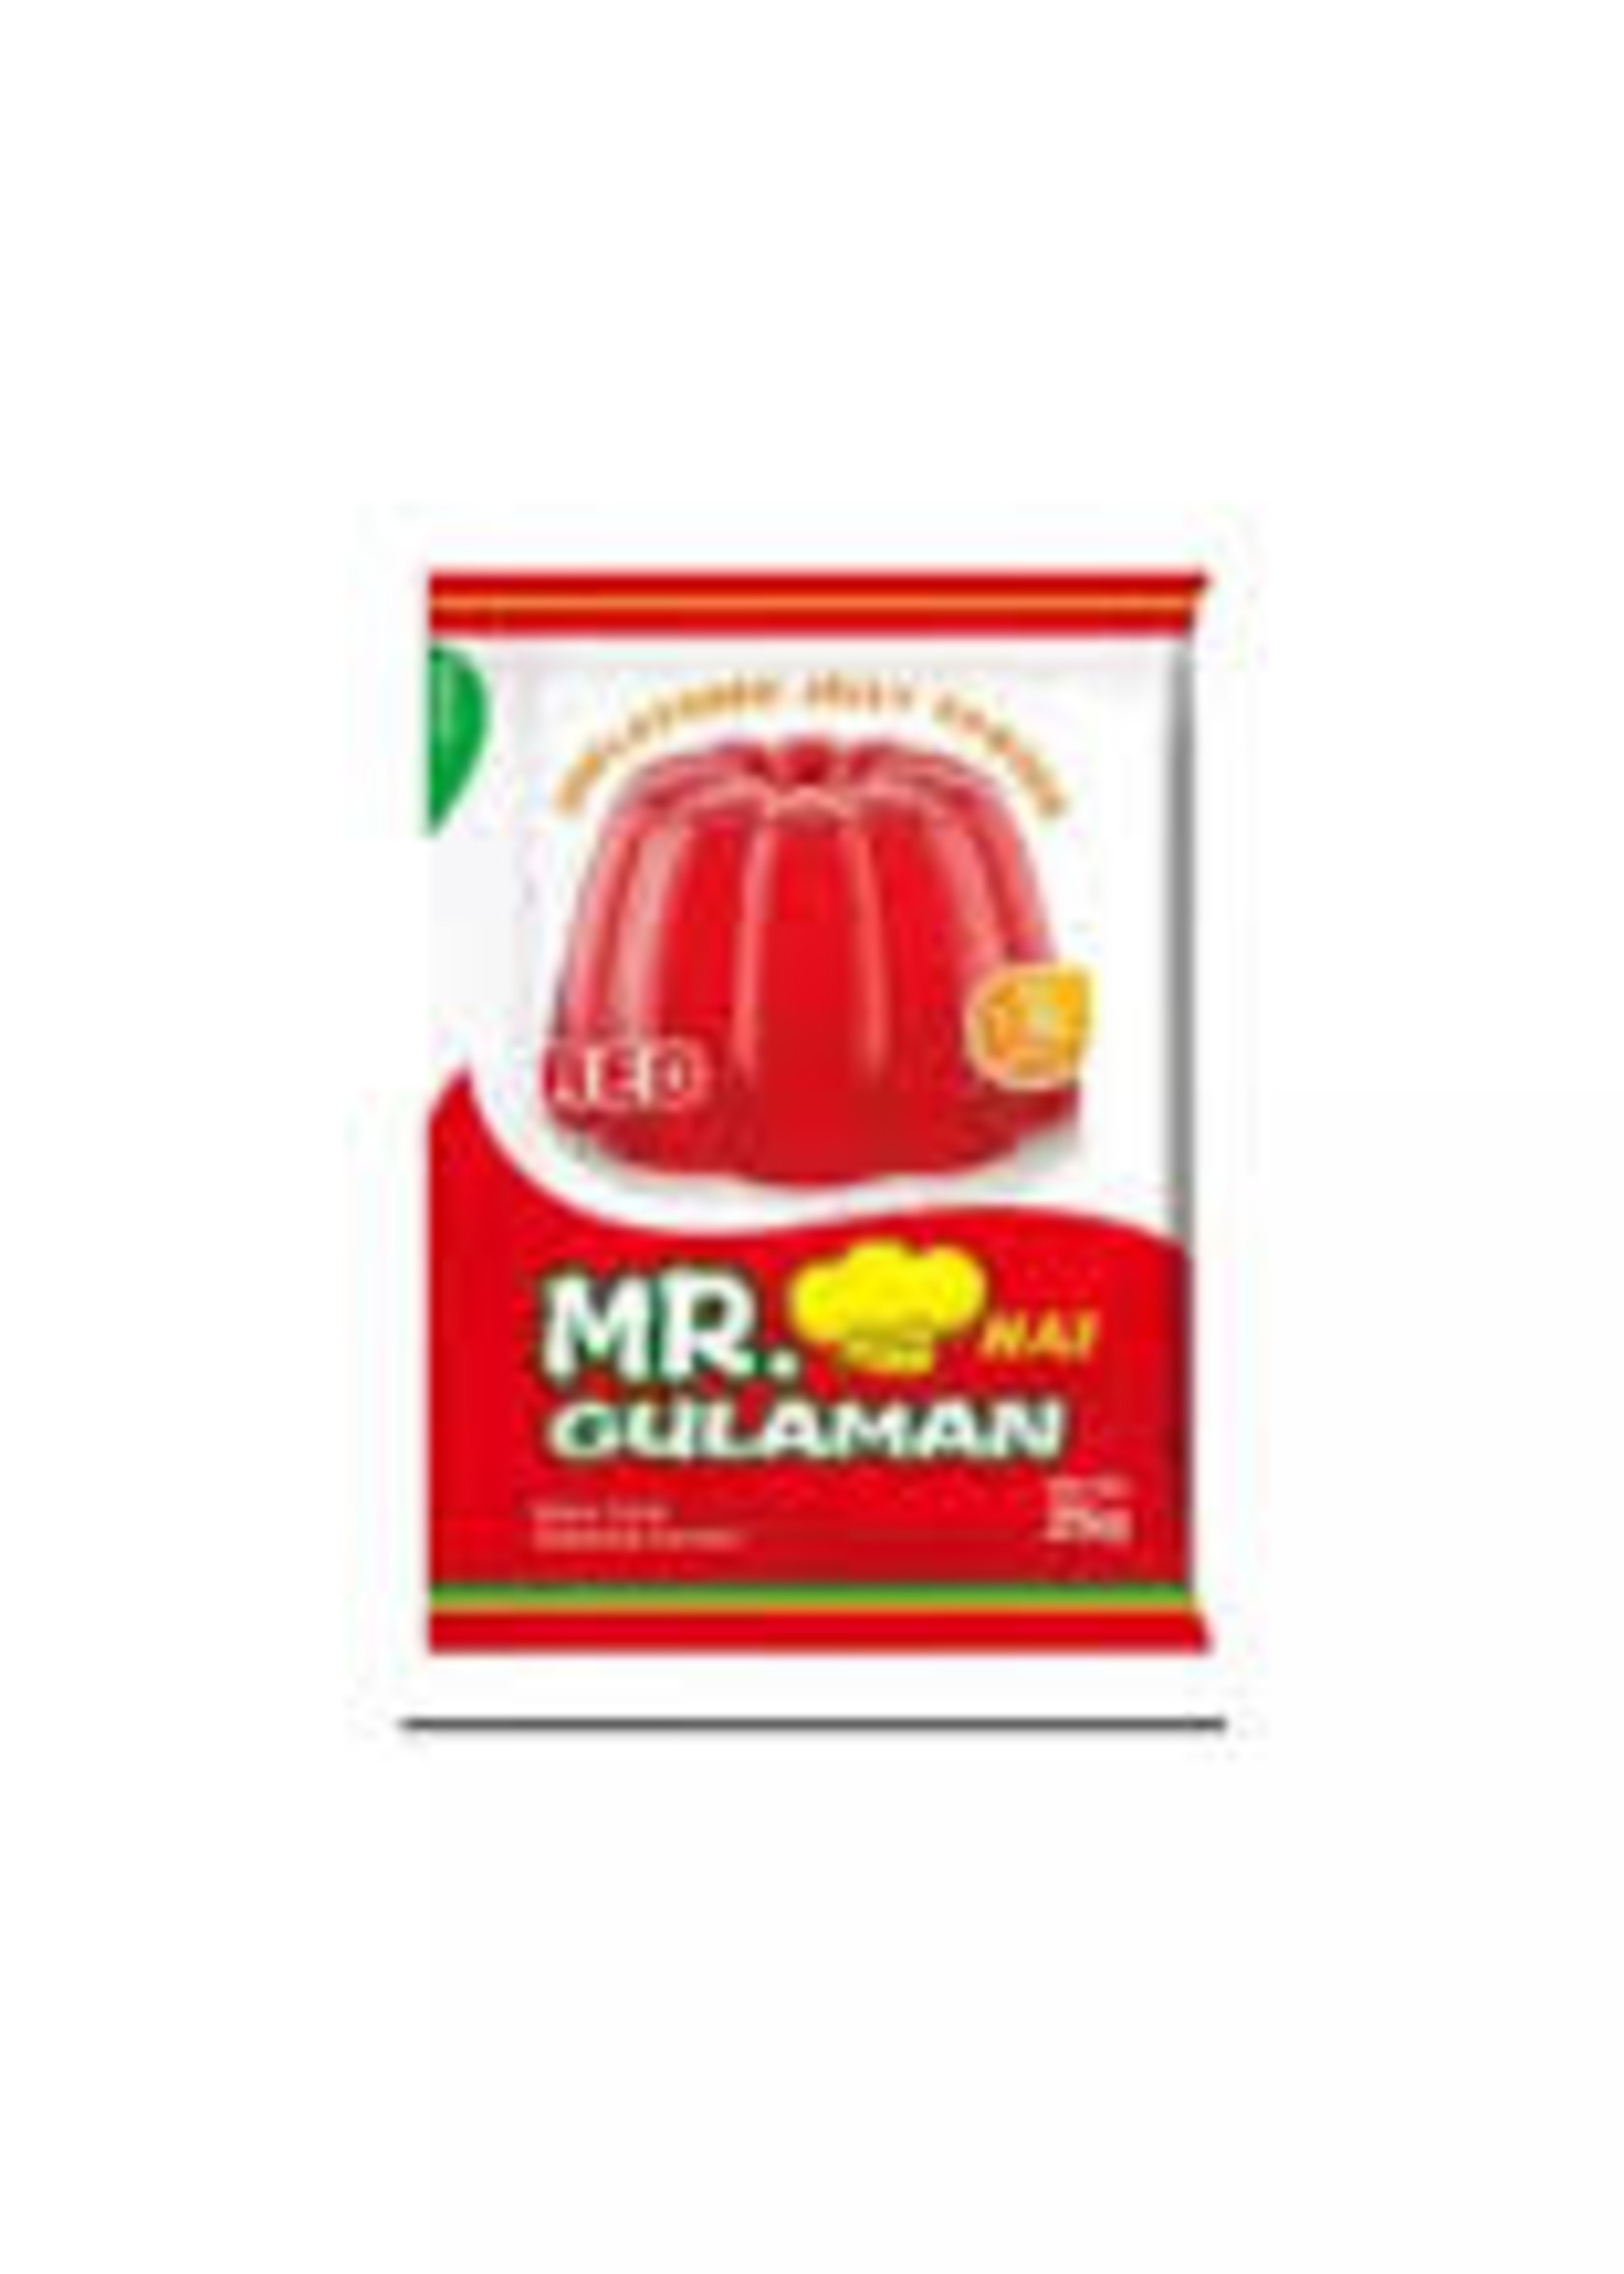 Mr Gulaman Mr Hat Gulaman Jelly Powder Red 25g